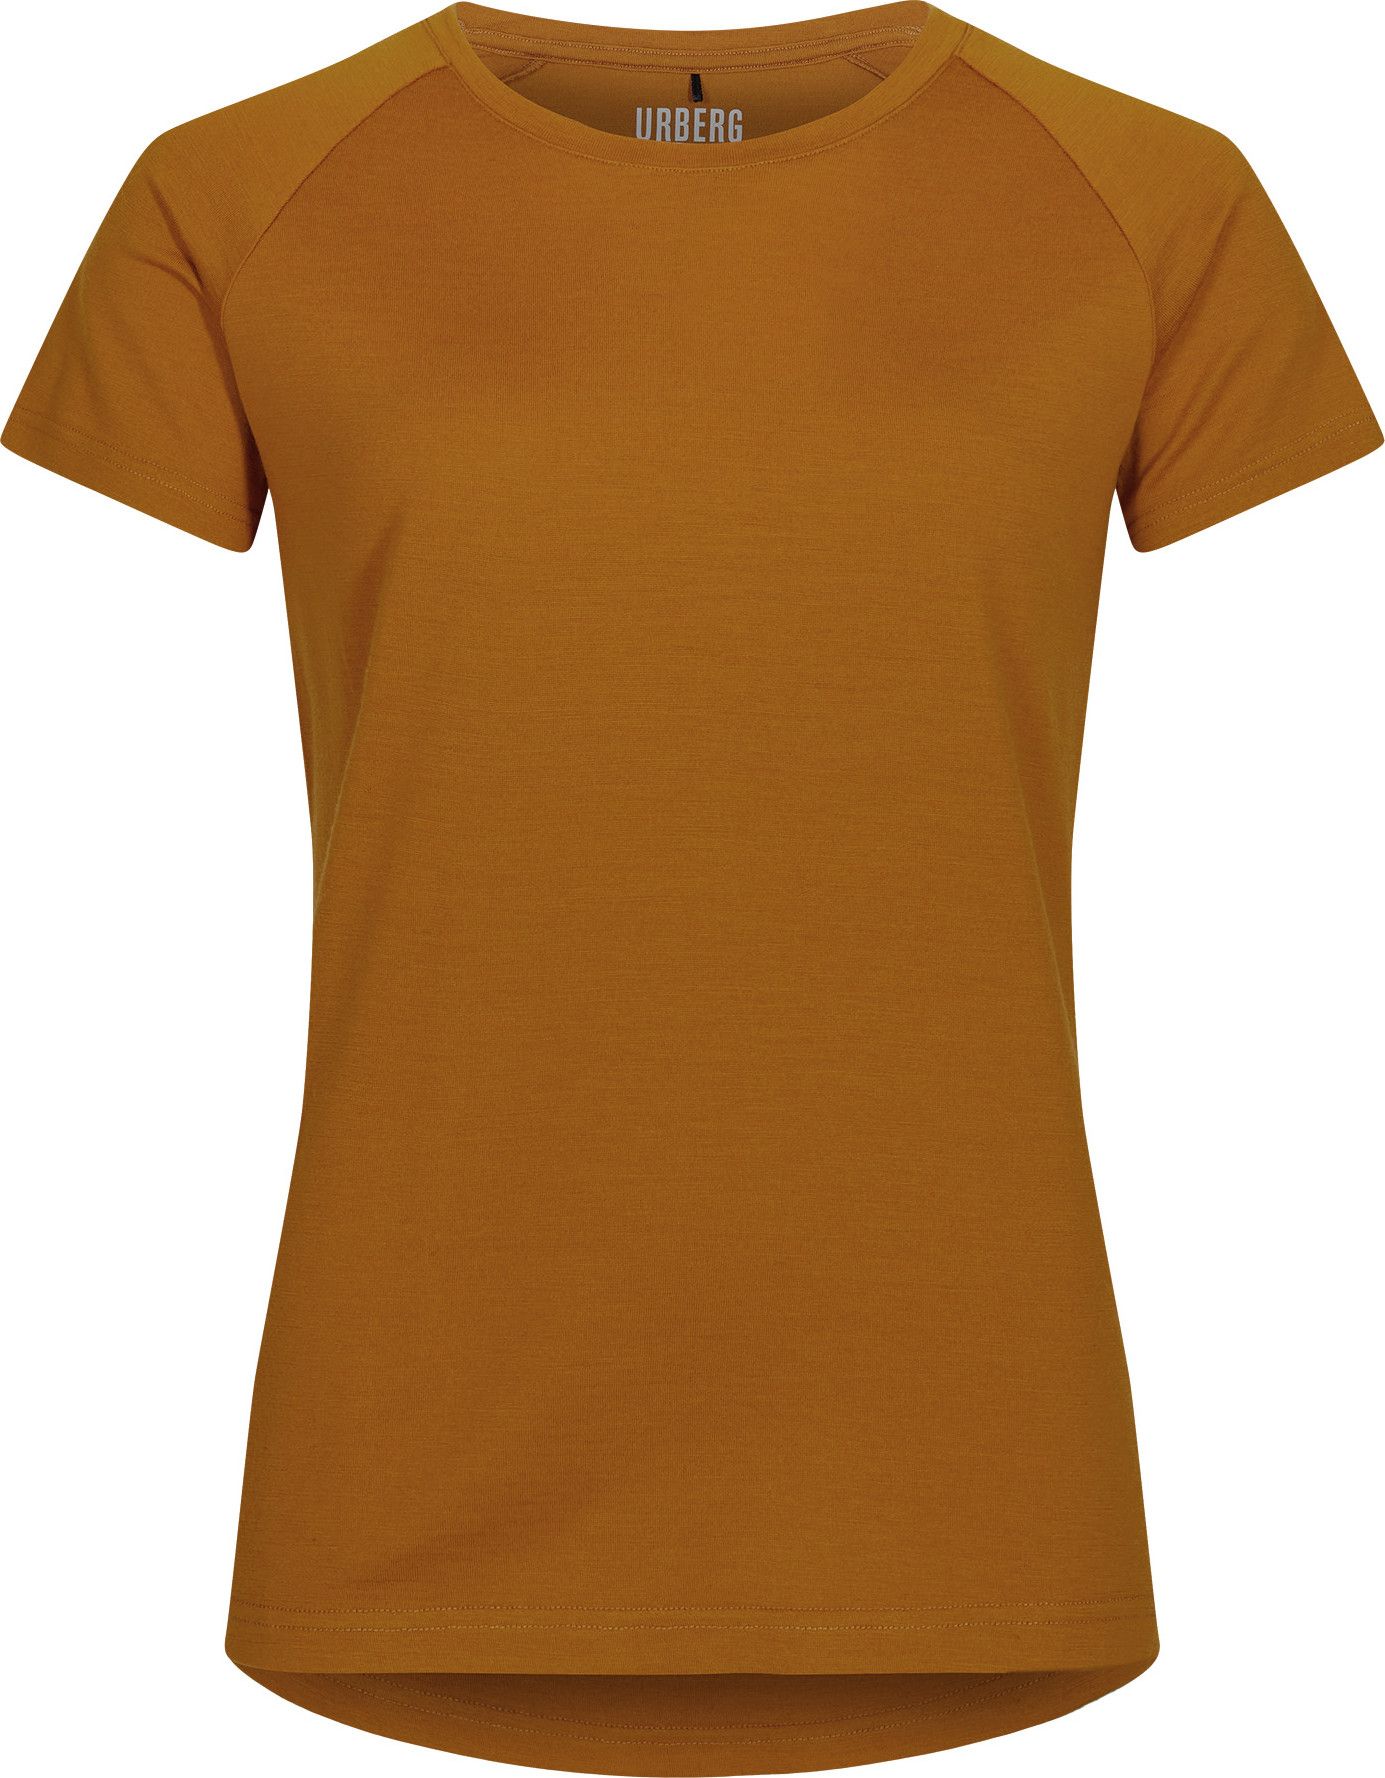 Urberg Women's Lyngen Merino T-Shirt 2.0 Pumpkin Spice